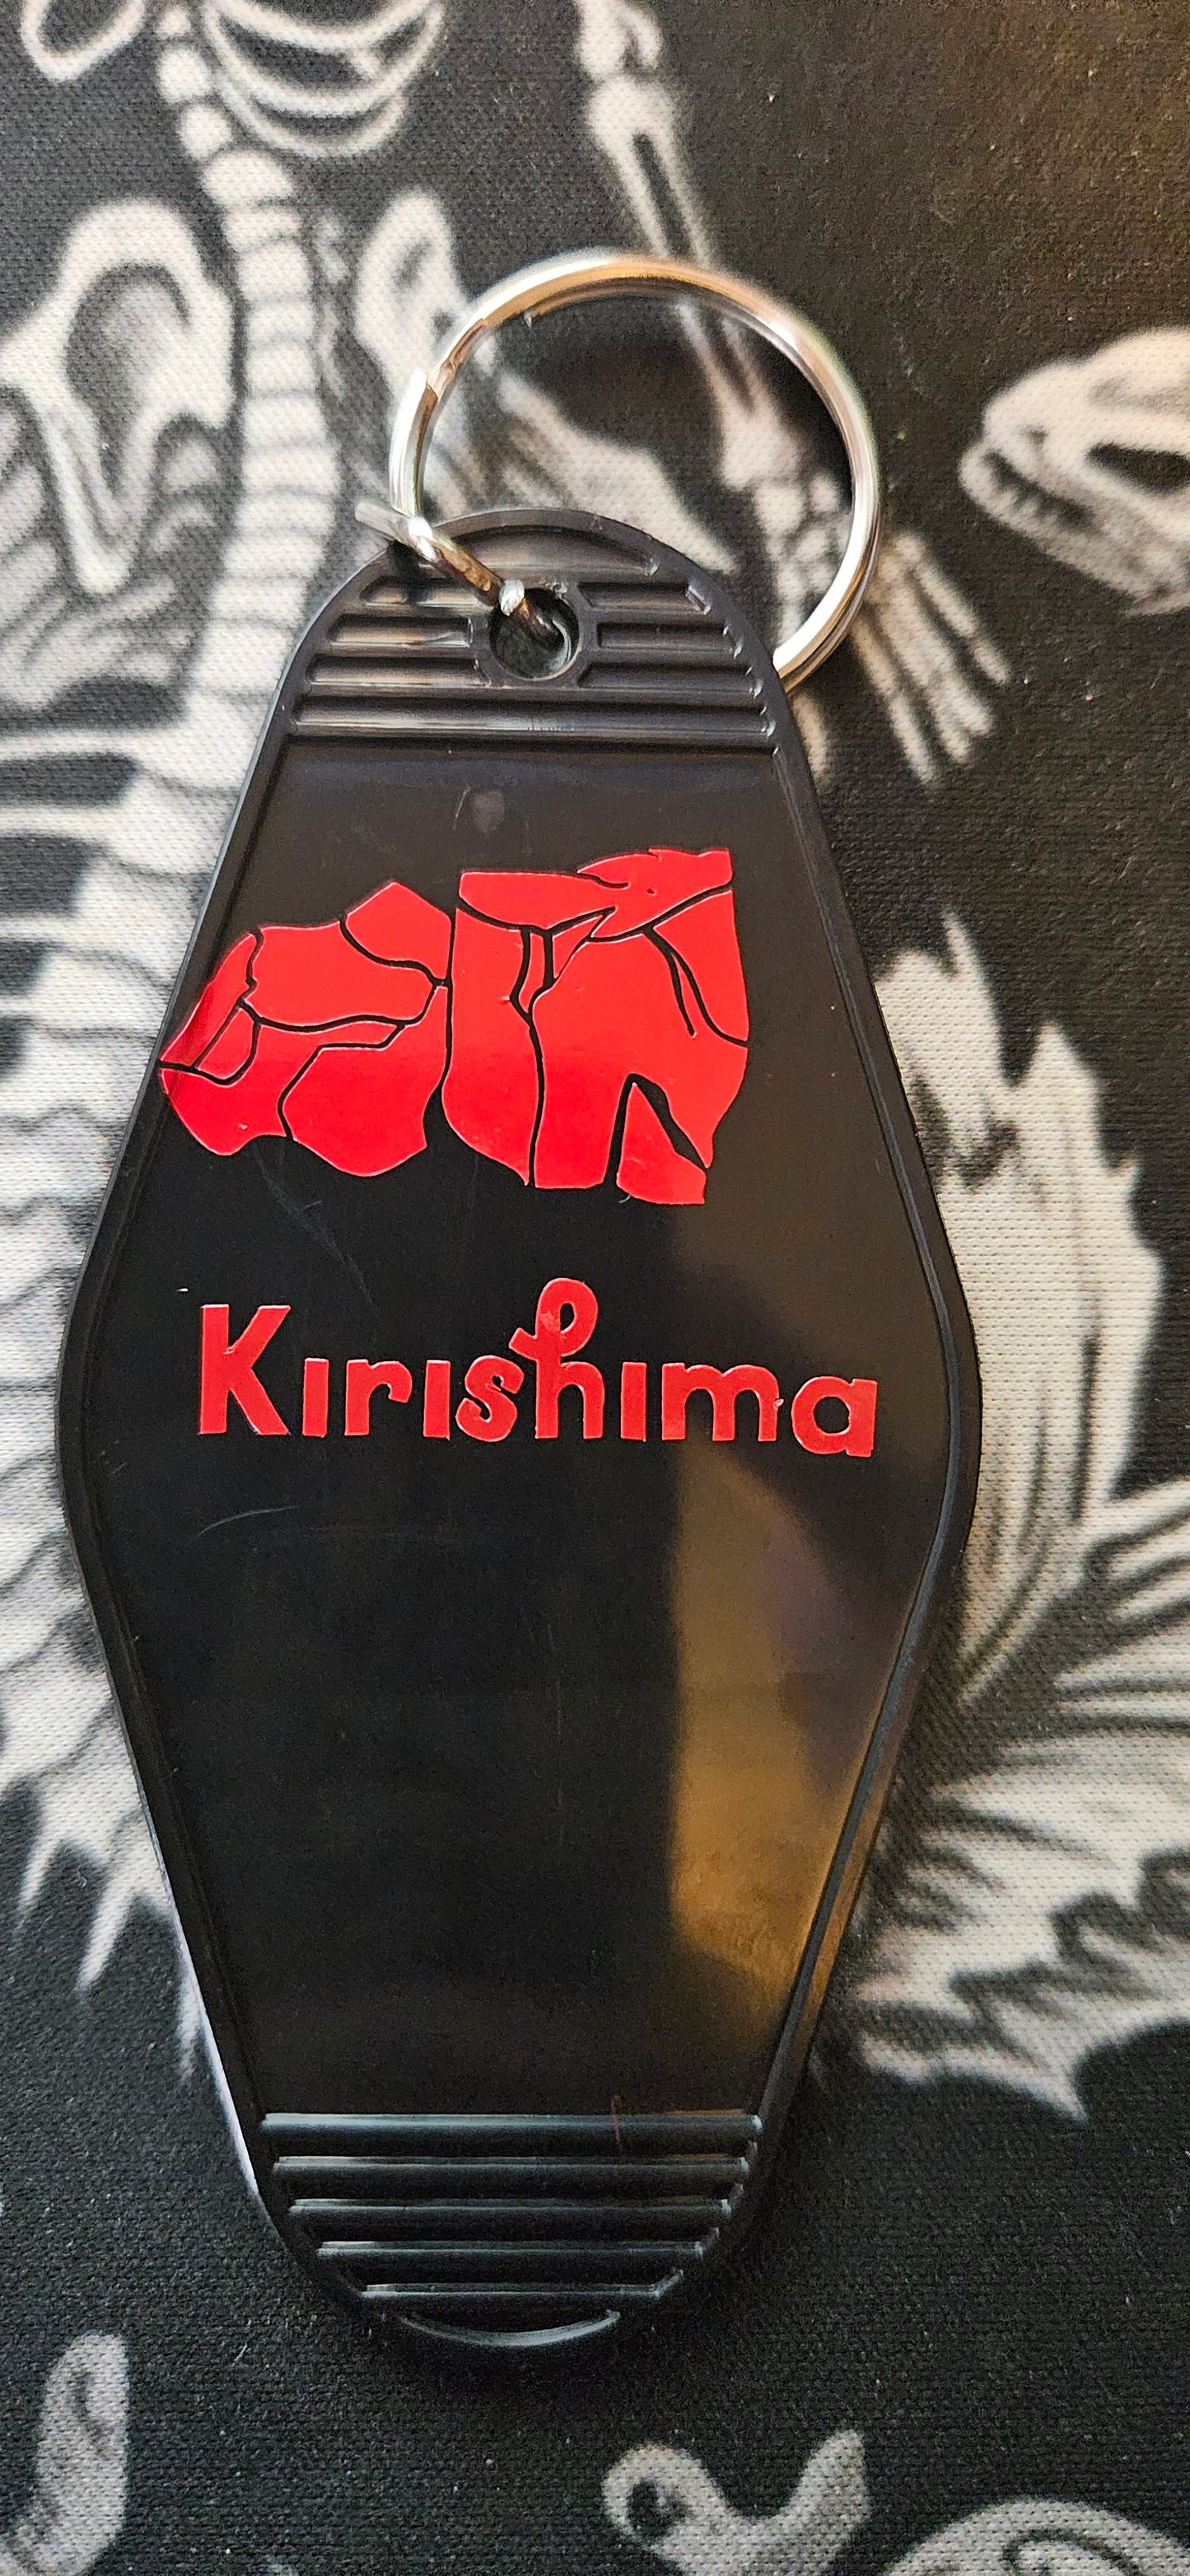 Kirishima Motel Keychains